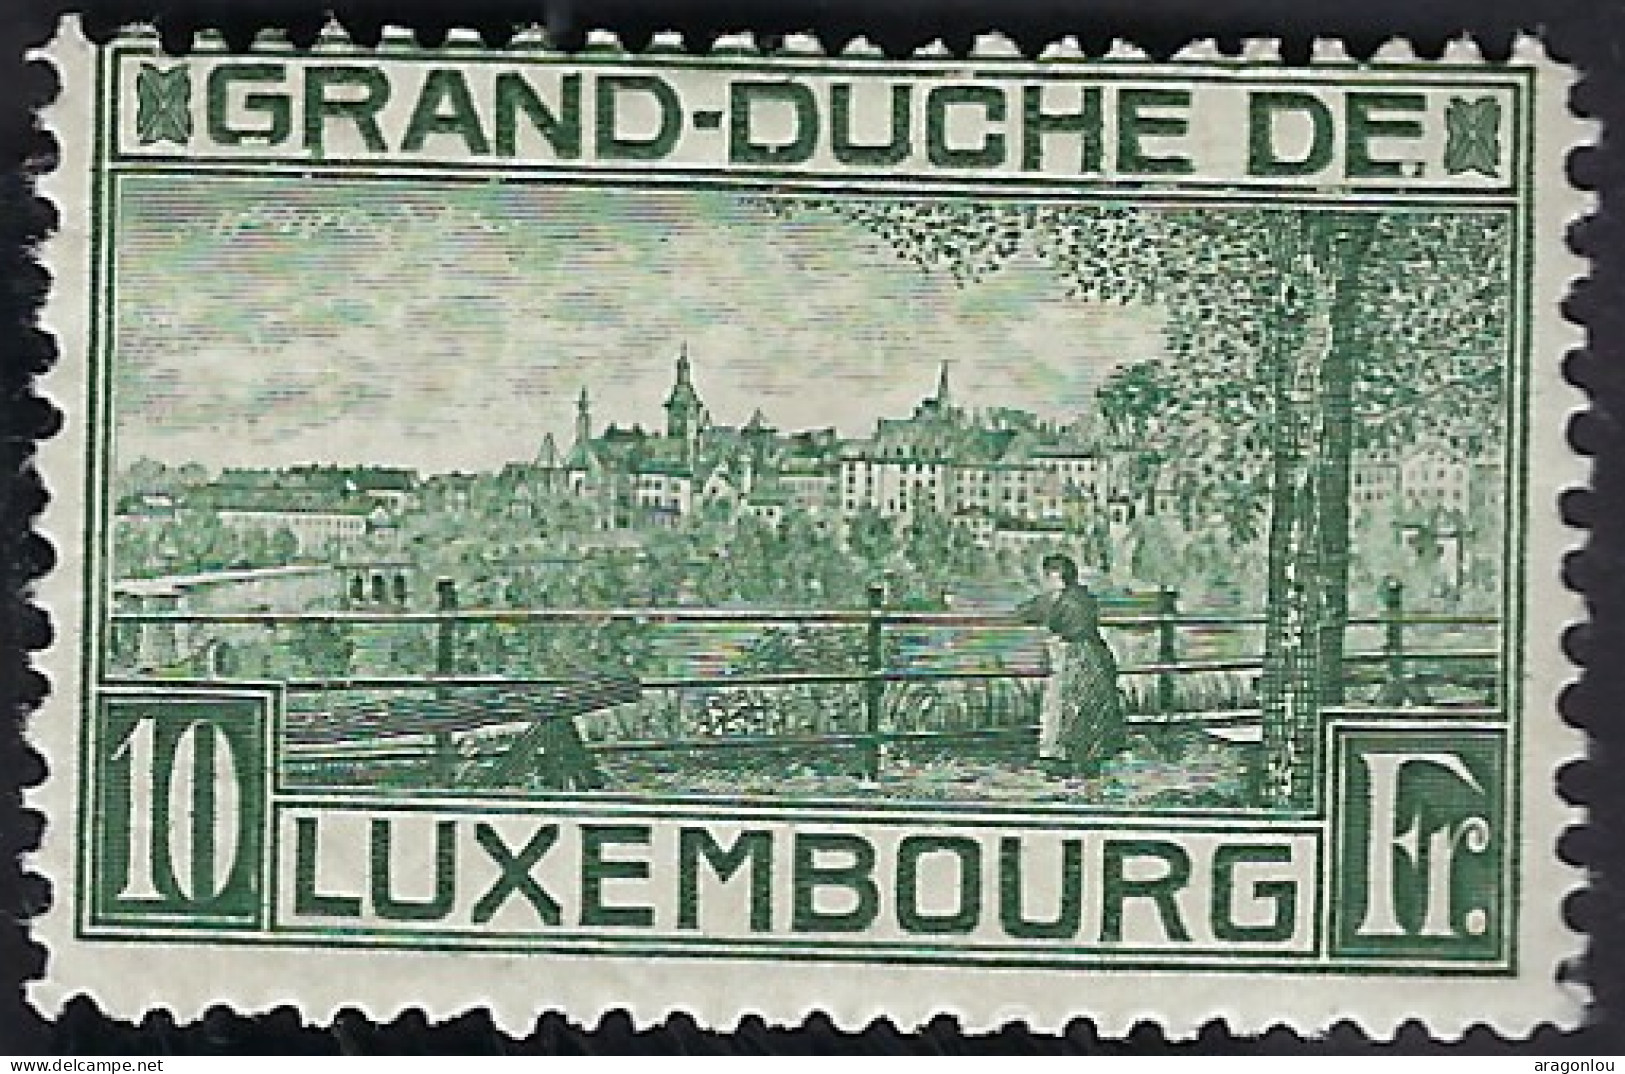 Luxembourg - Luxemburg - Timbre   1923   Naissance  Princesse Elisabeth   Michel 142   *   VC. 600,- Très Rare - Usati